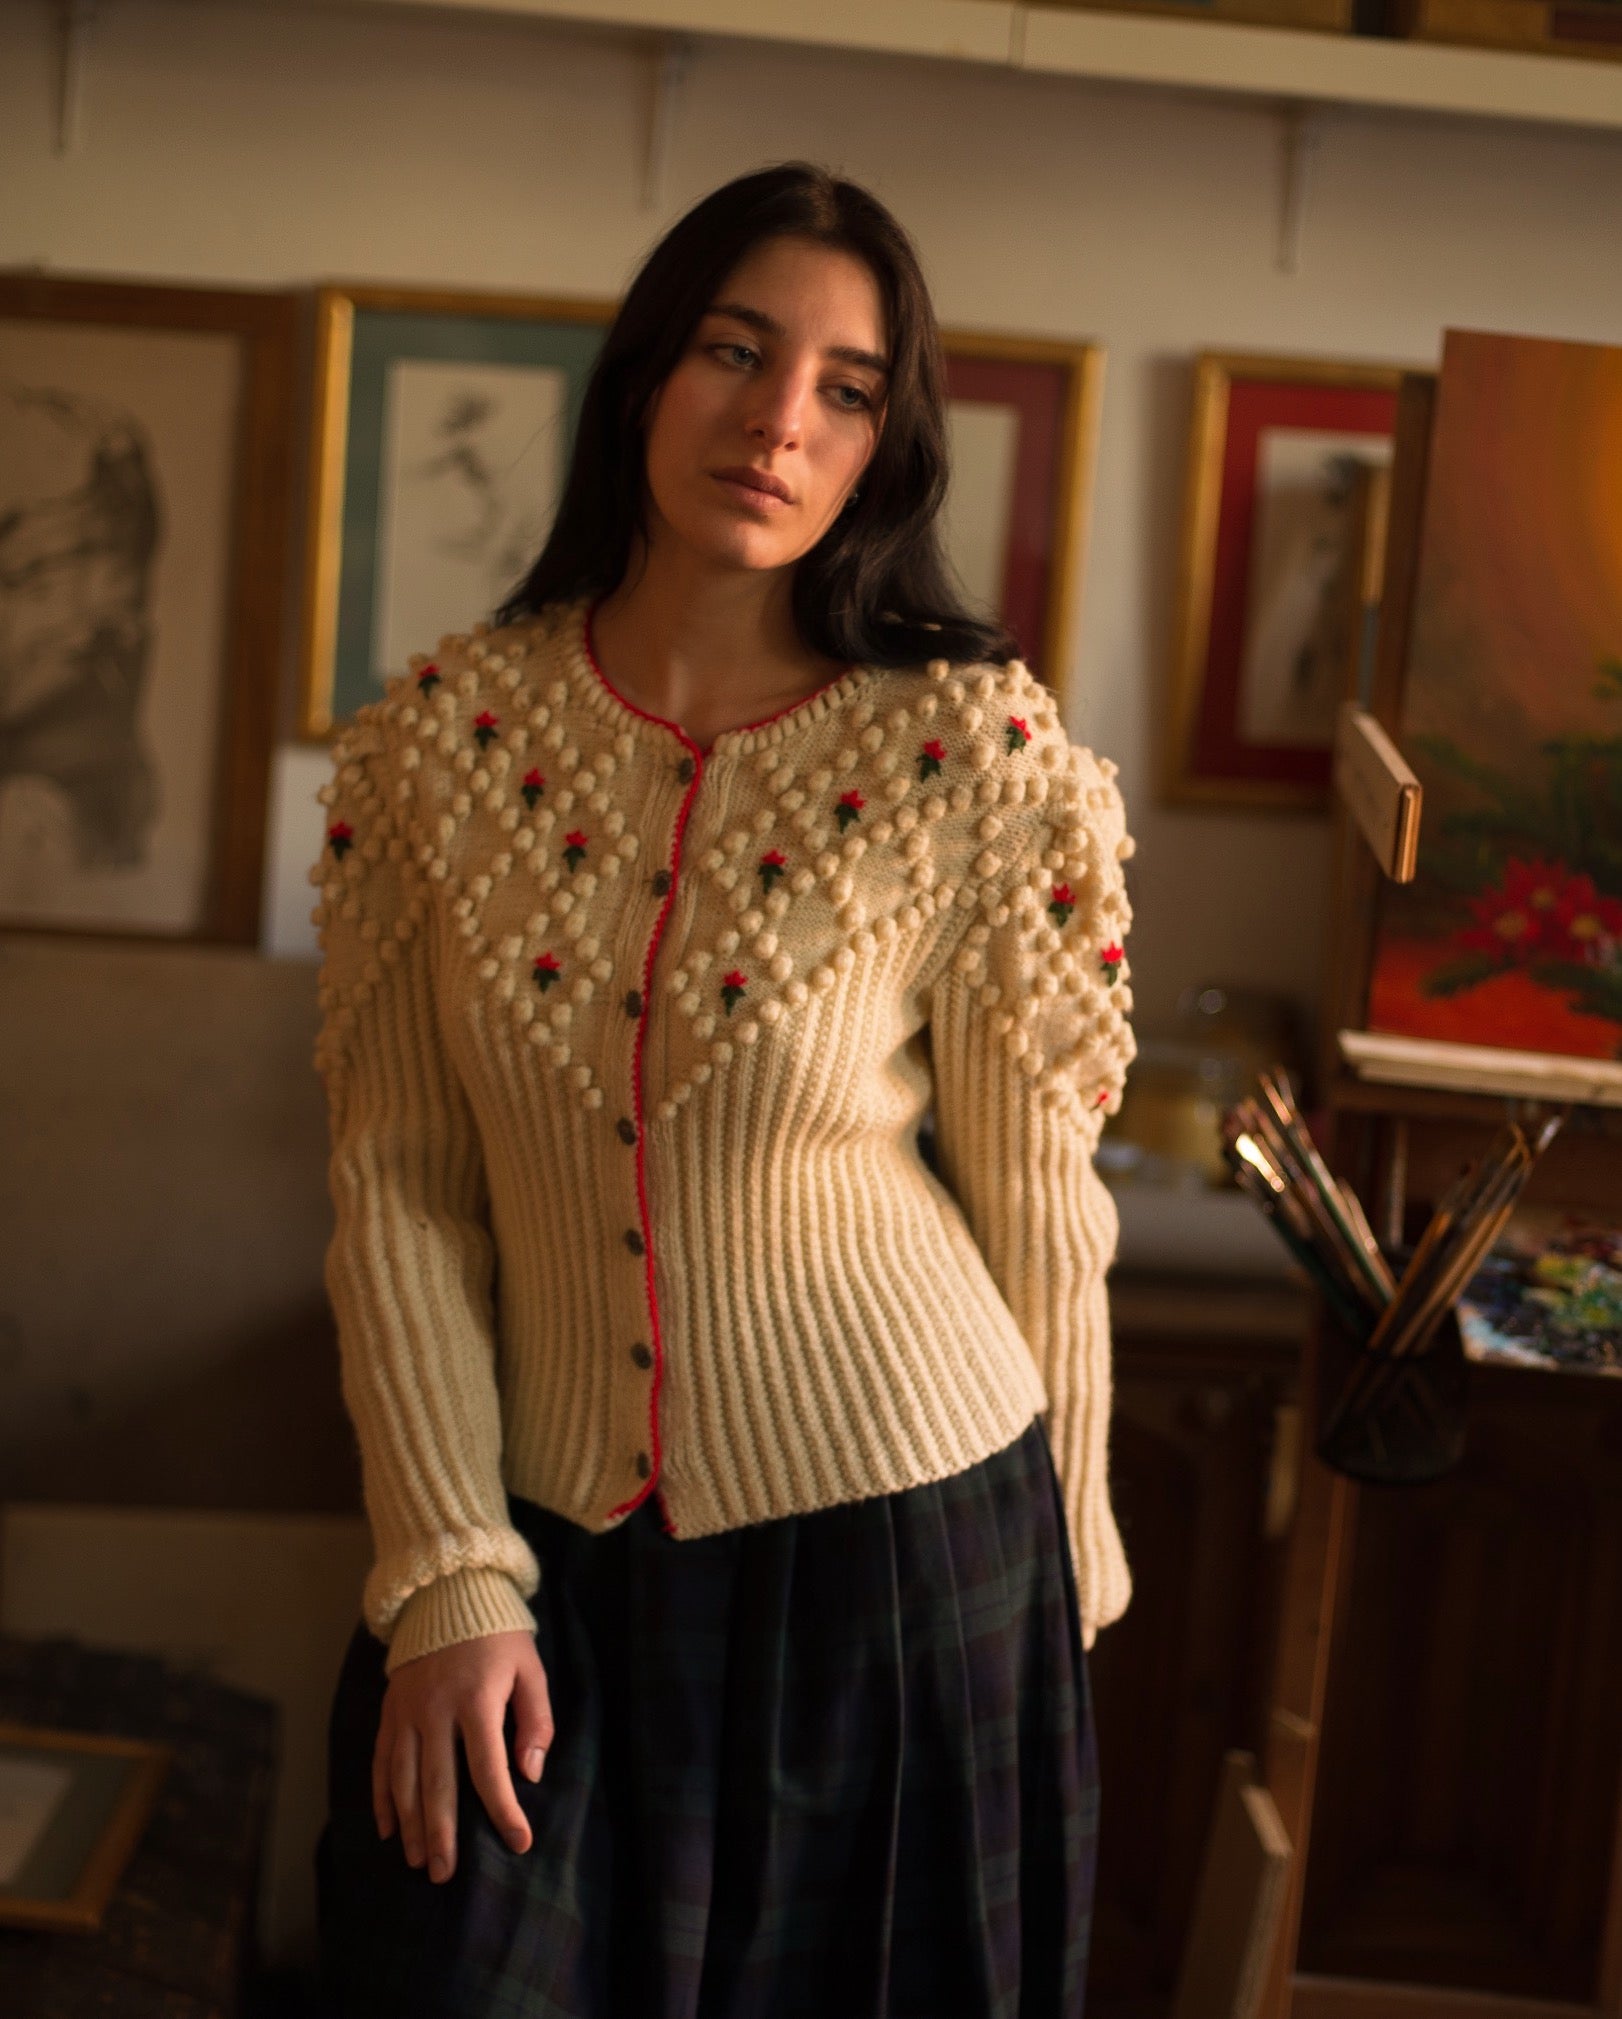 Vintage wool hand knit bobble knit trachten cardigan sweater